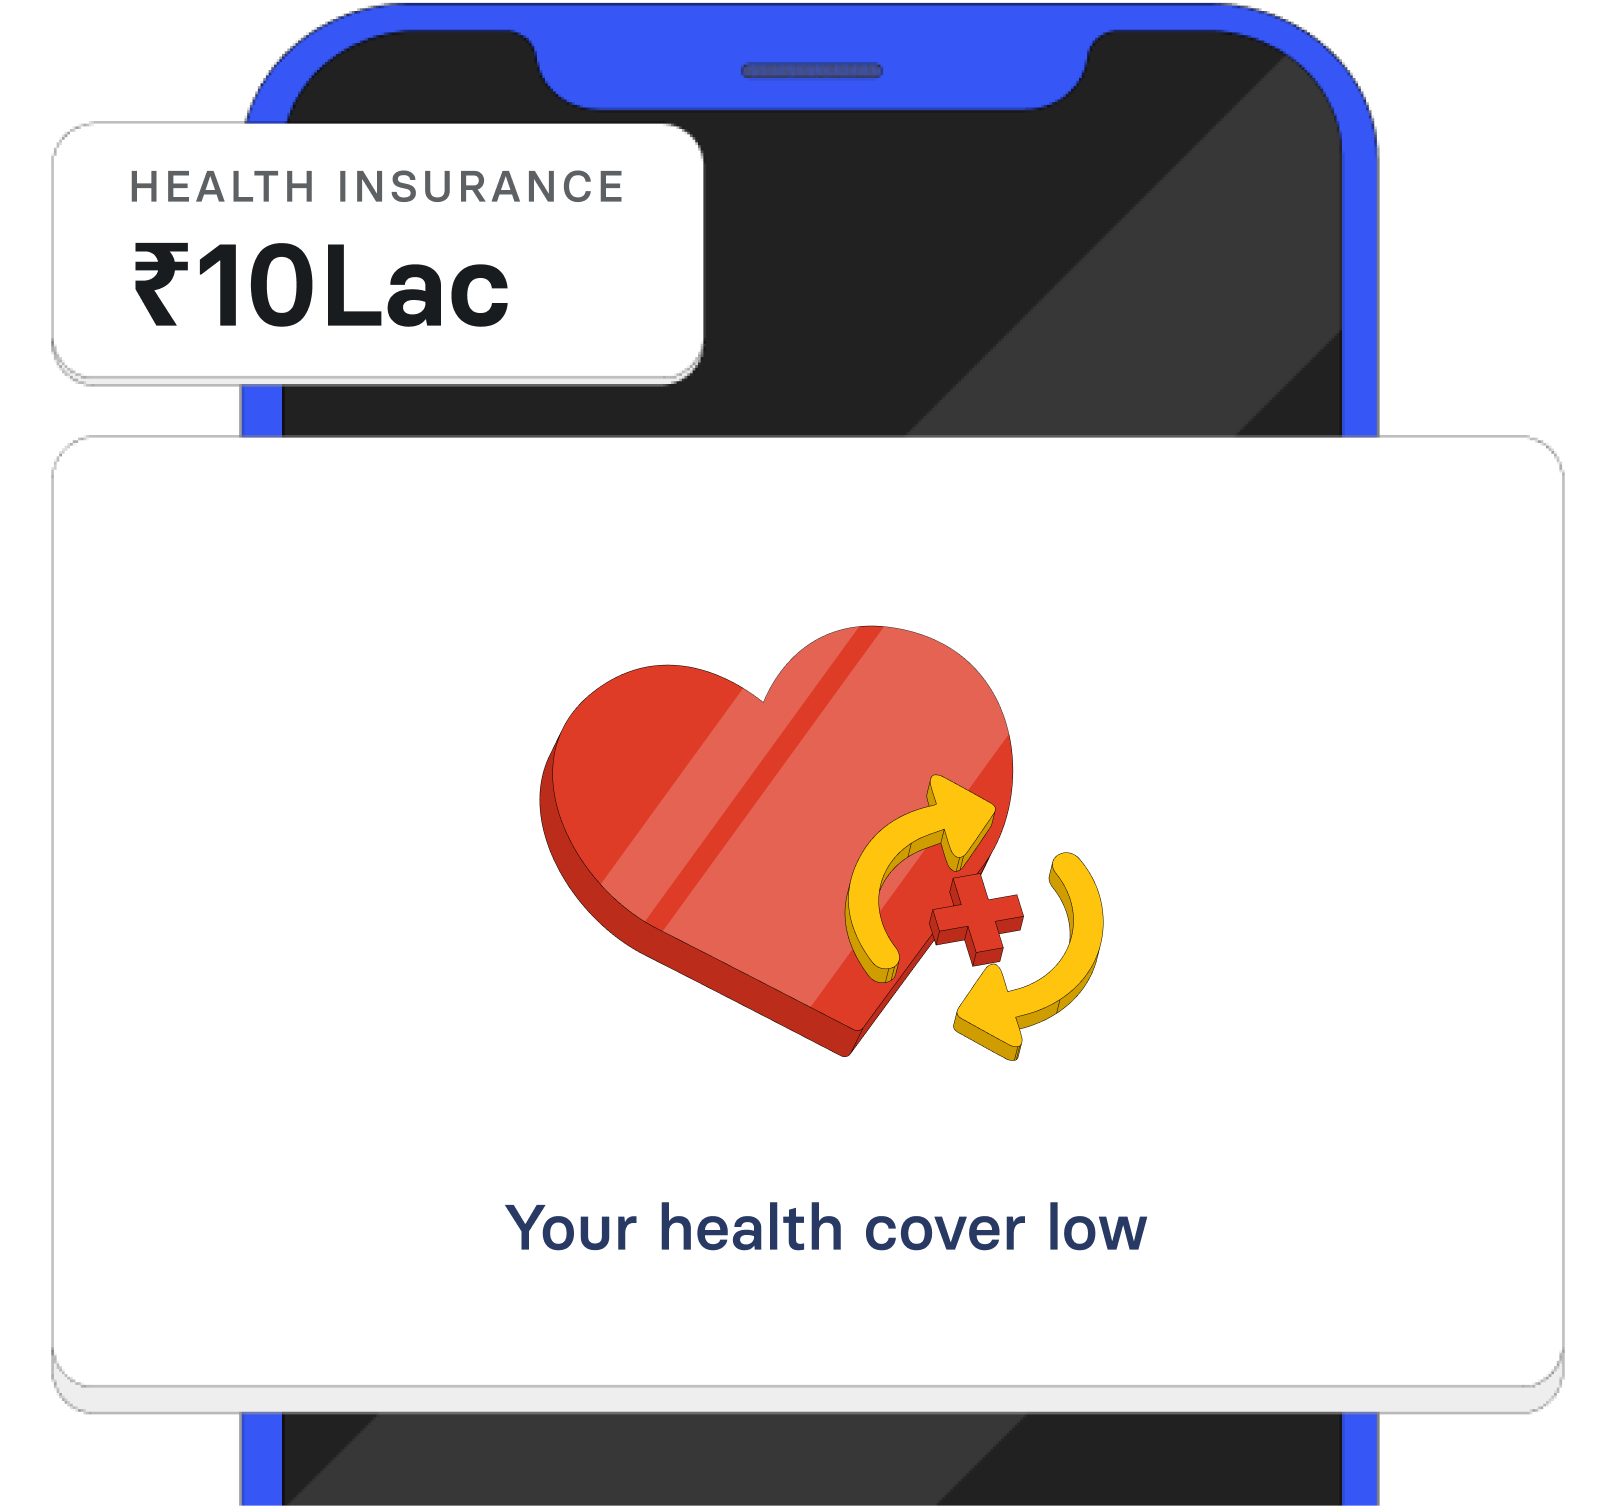 Health insurance